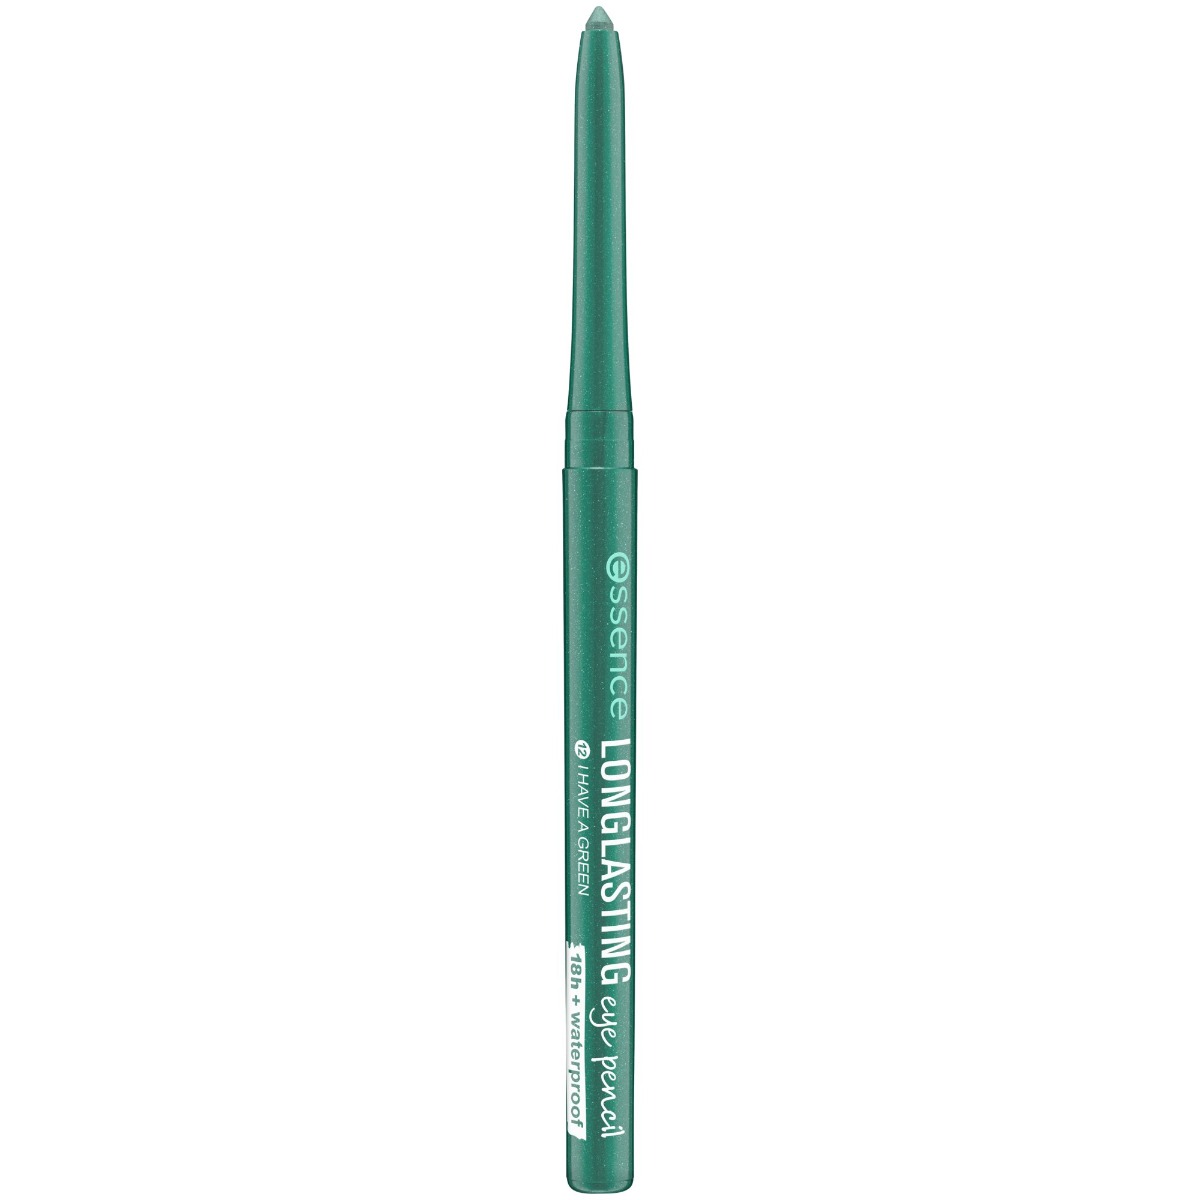 Creion pentru ochi Long-Lasting 12 - I Have a Green, 0.28g, Essence